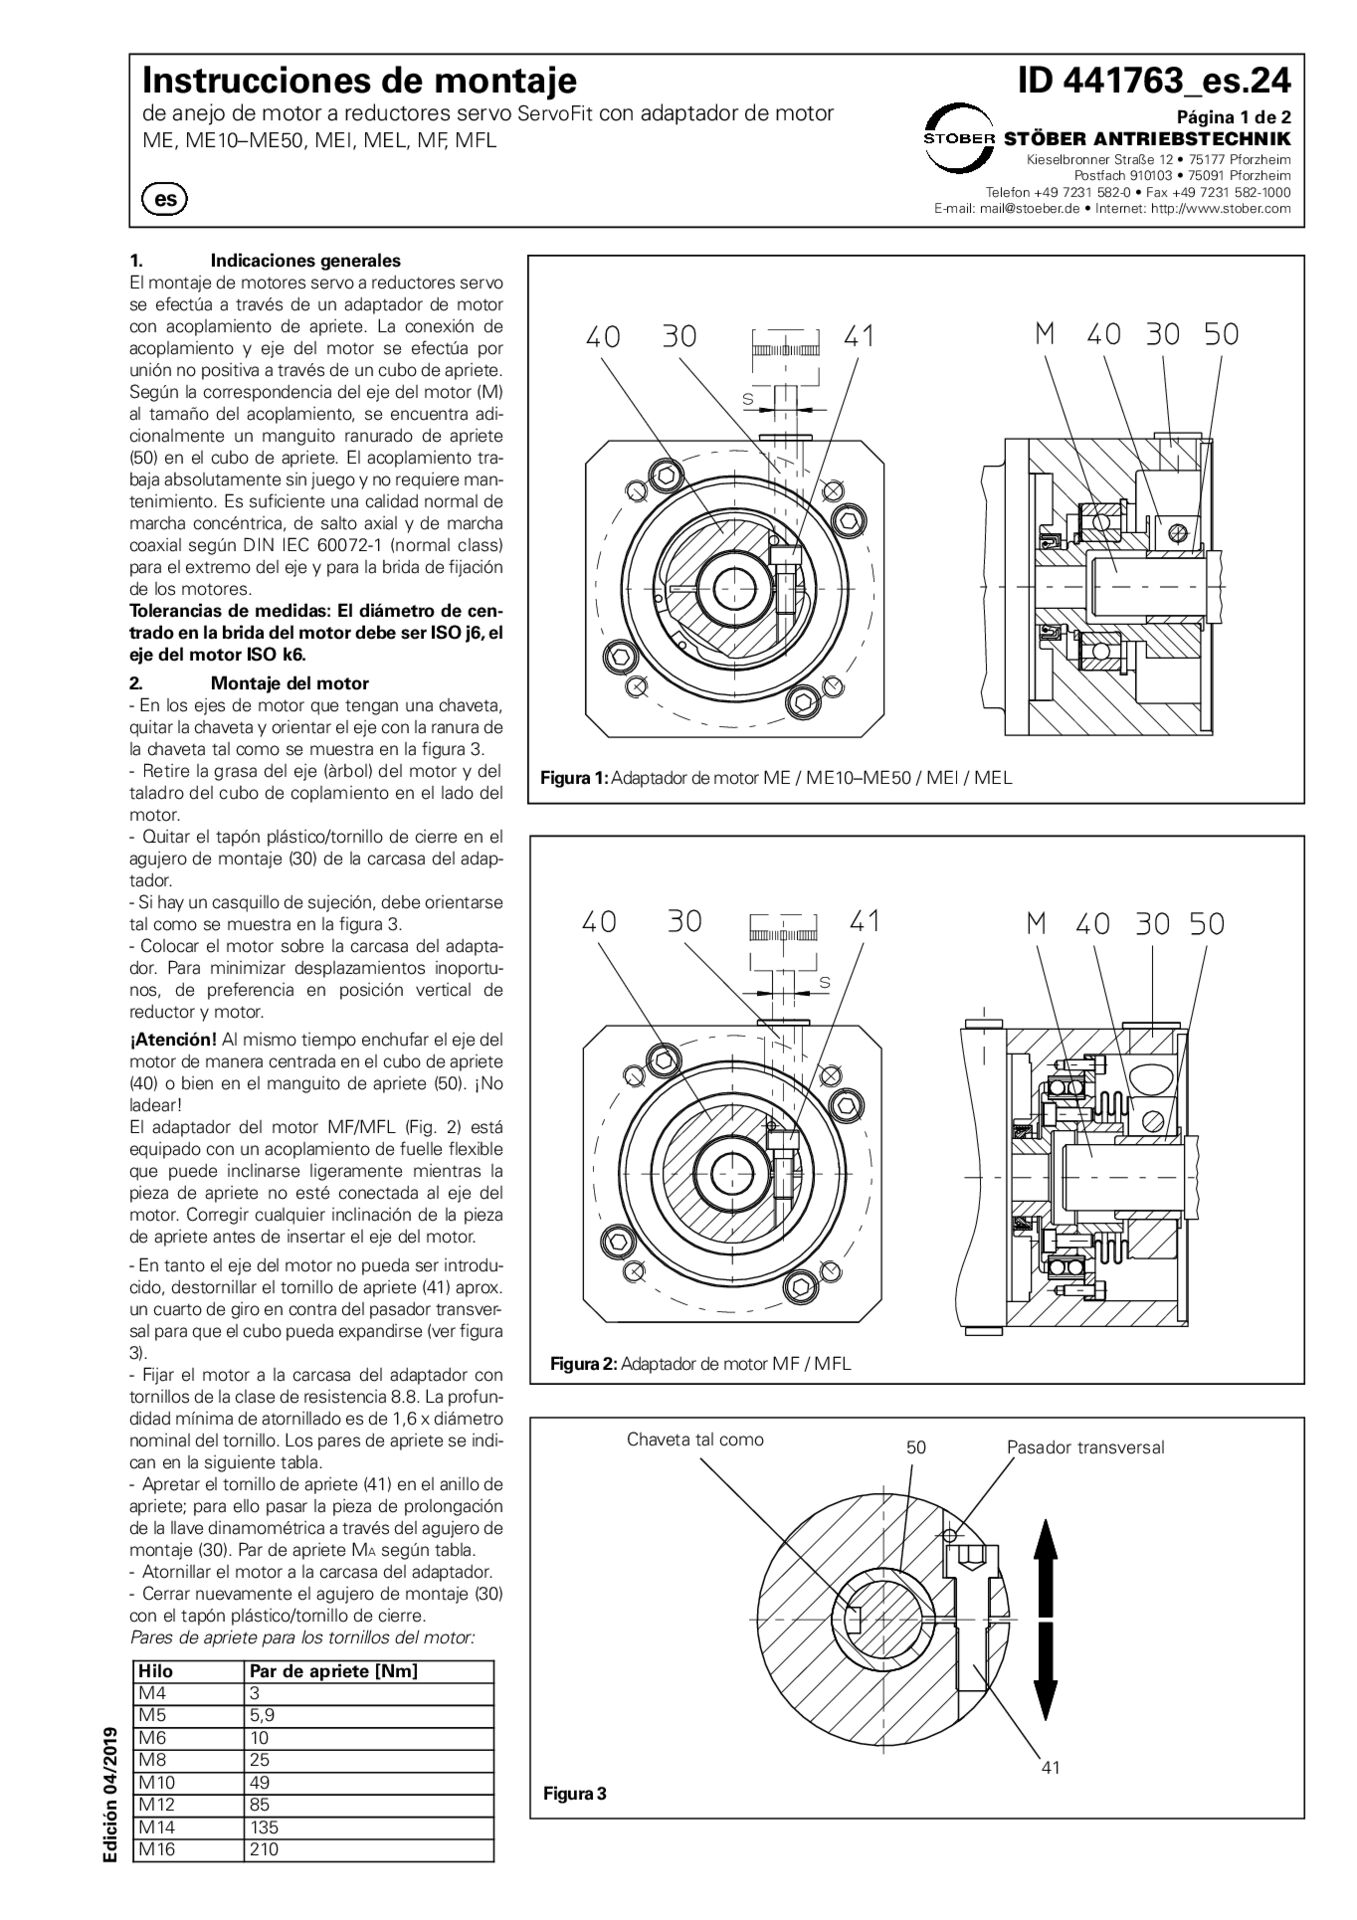 Instrucciones de montaje de aneho de motor a reductores servo Servofit con adaptor de motor ME ME10-ME50 MEI MEL MG MFL